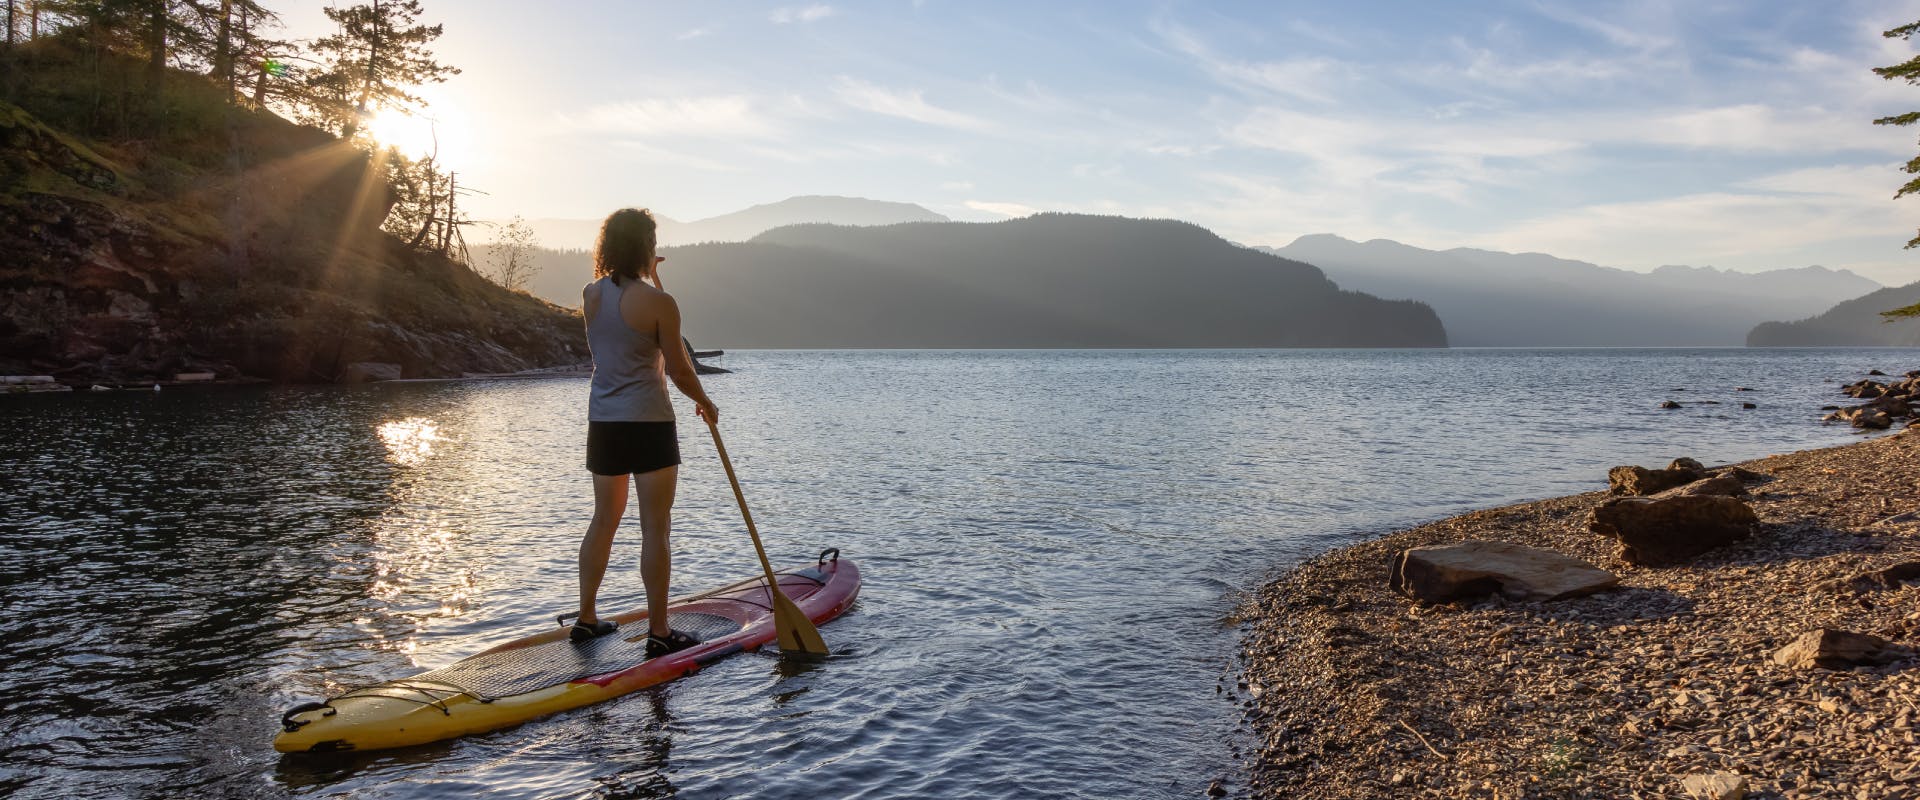 A woman paddle boards across a lake.